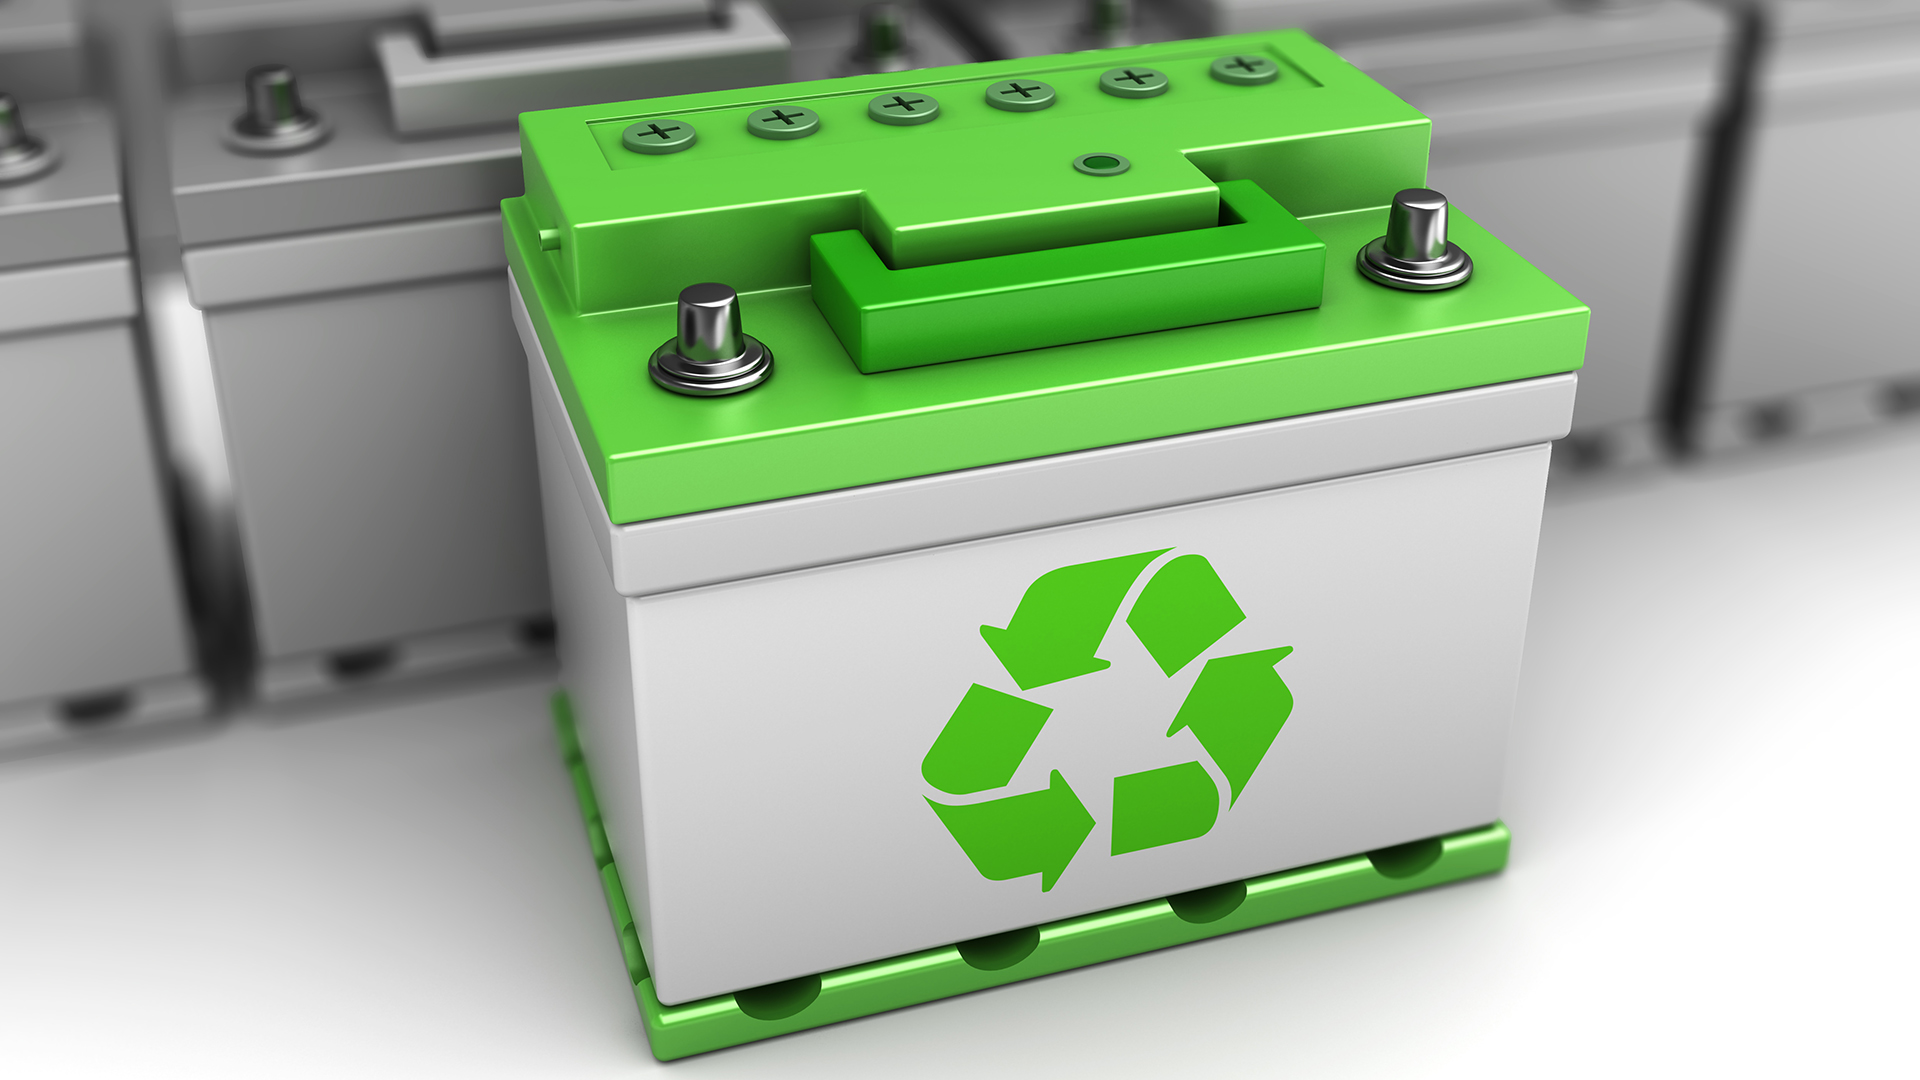 Lead batteries. Аккумулятор Энерджи зеленый. Аккумулятор recycle. Аккумуляторы фон. Аккумулятор с зелёной этикеткой.